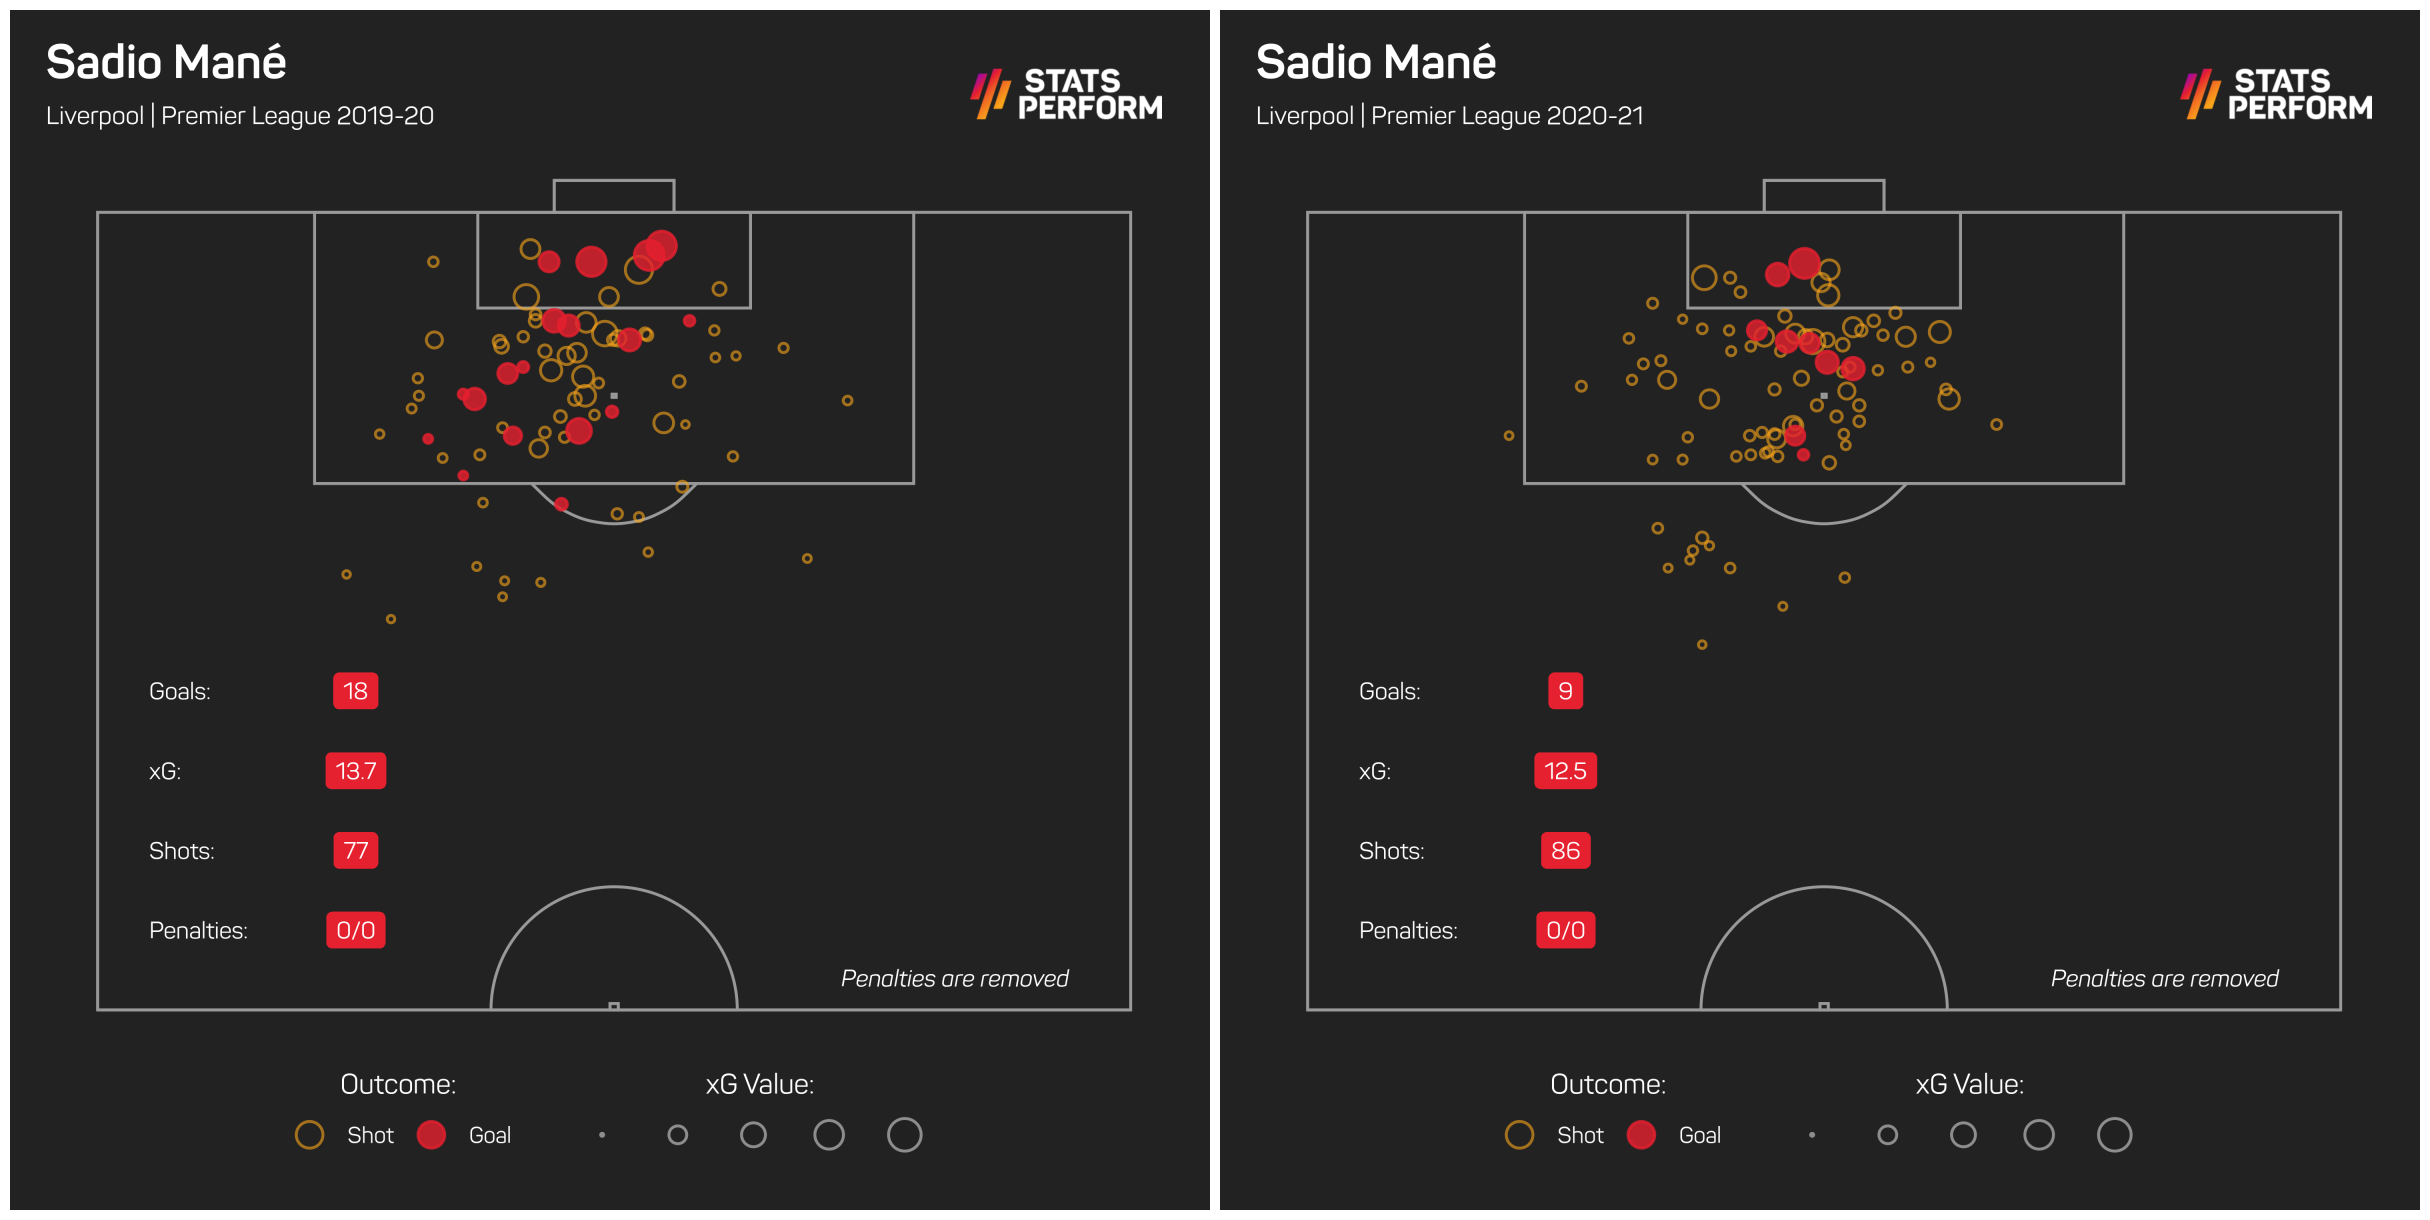 Sadio Mane was lethal last season but is proving wasteful in 2020-21